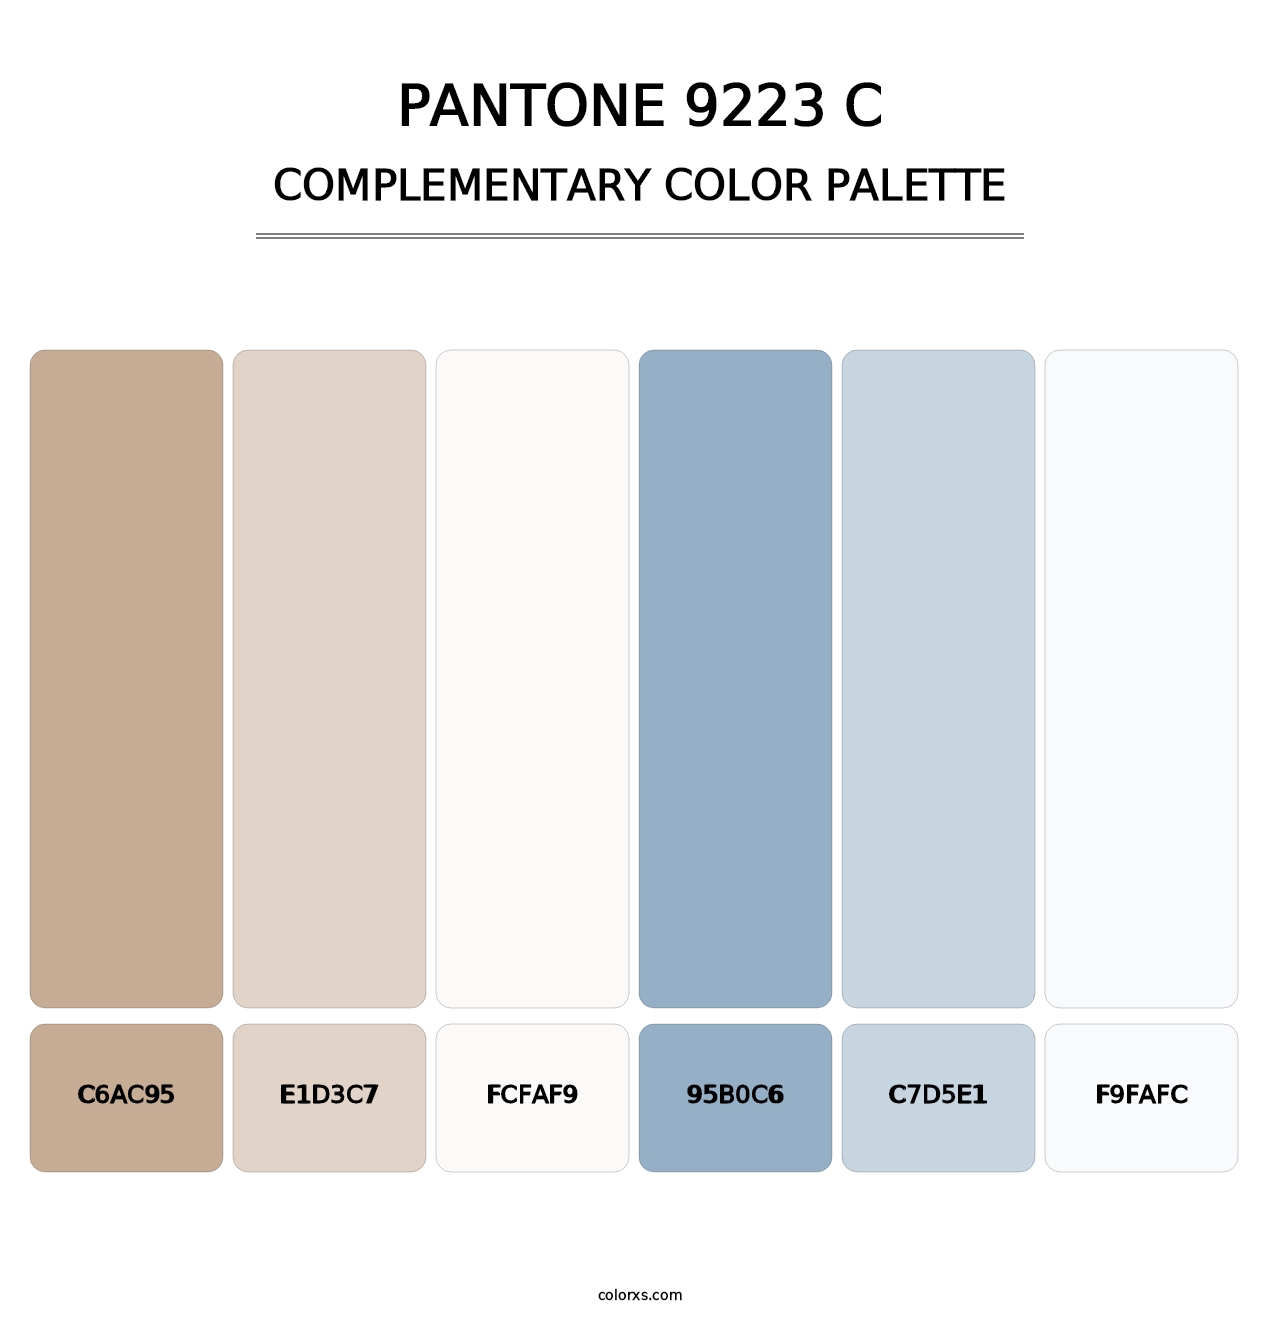 PANTONE 9223 C - Complementary Color Palette